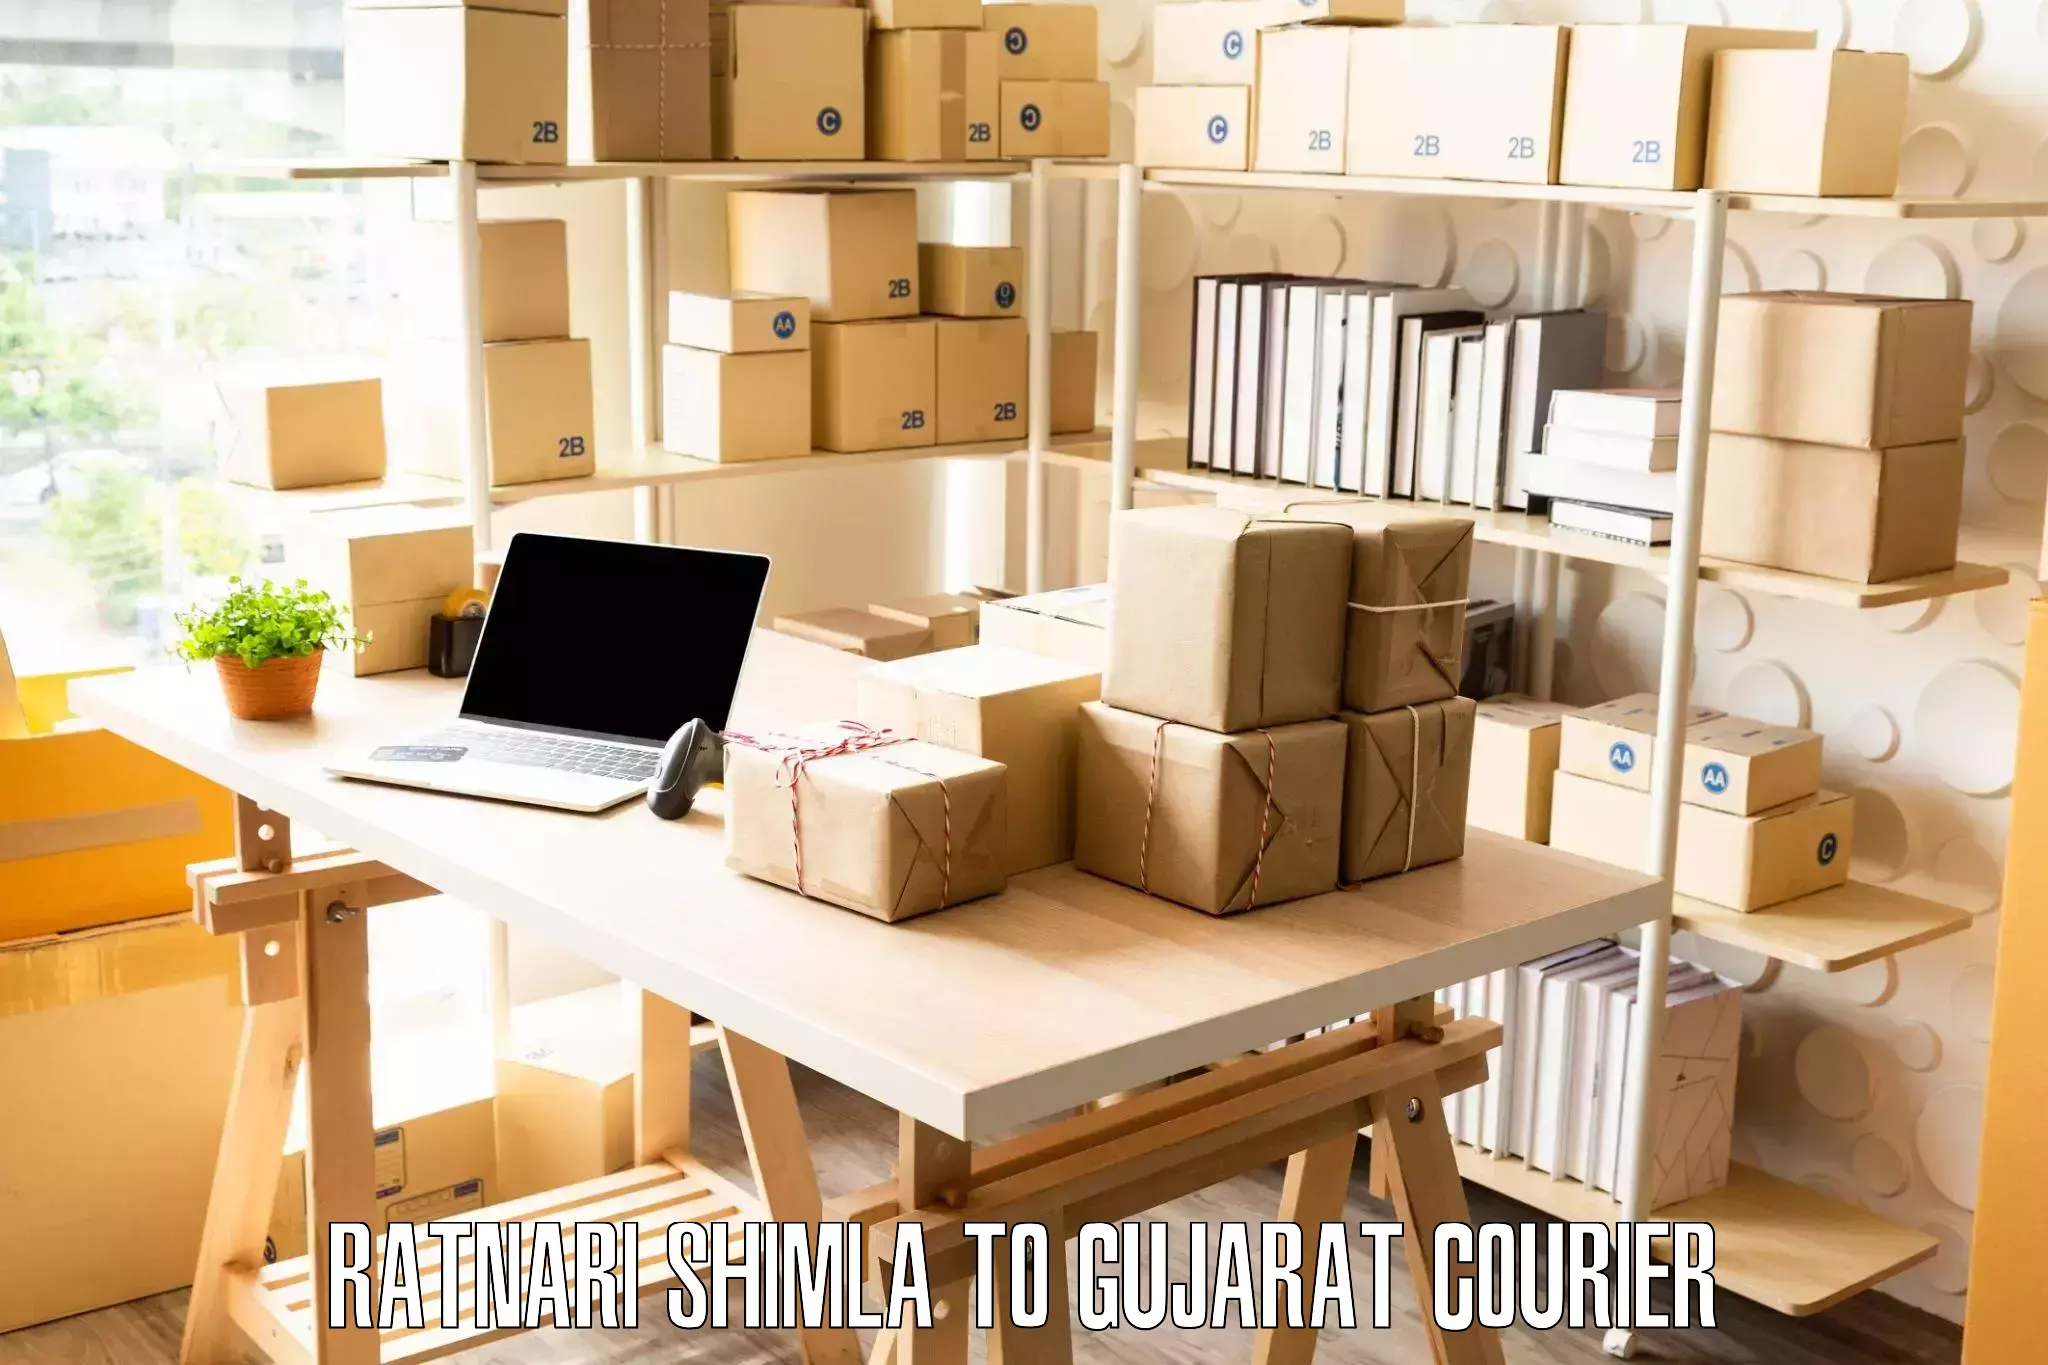 Moving and packing experts Ratnari Shimla to Anand